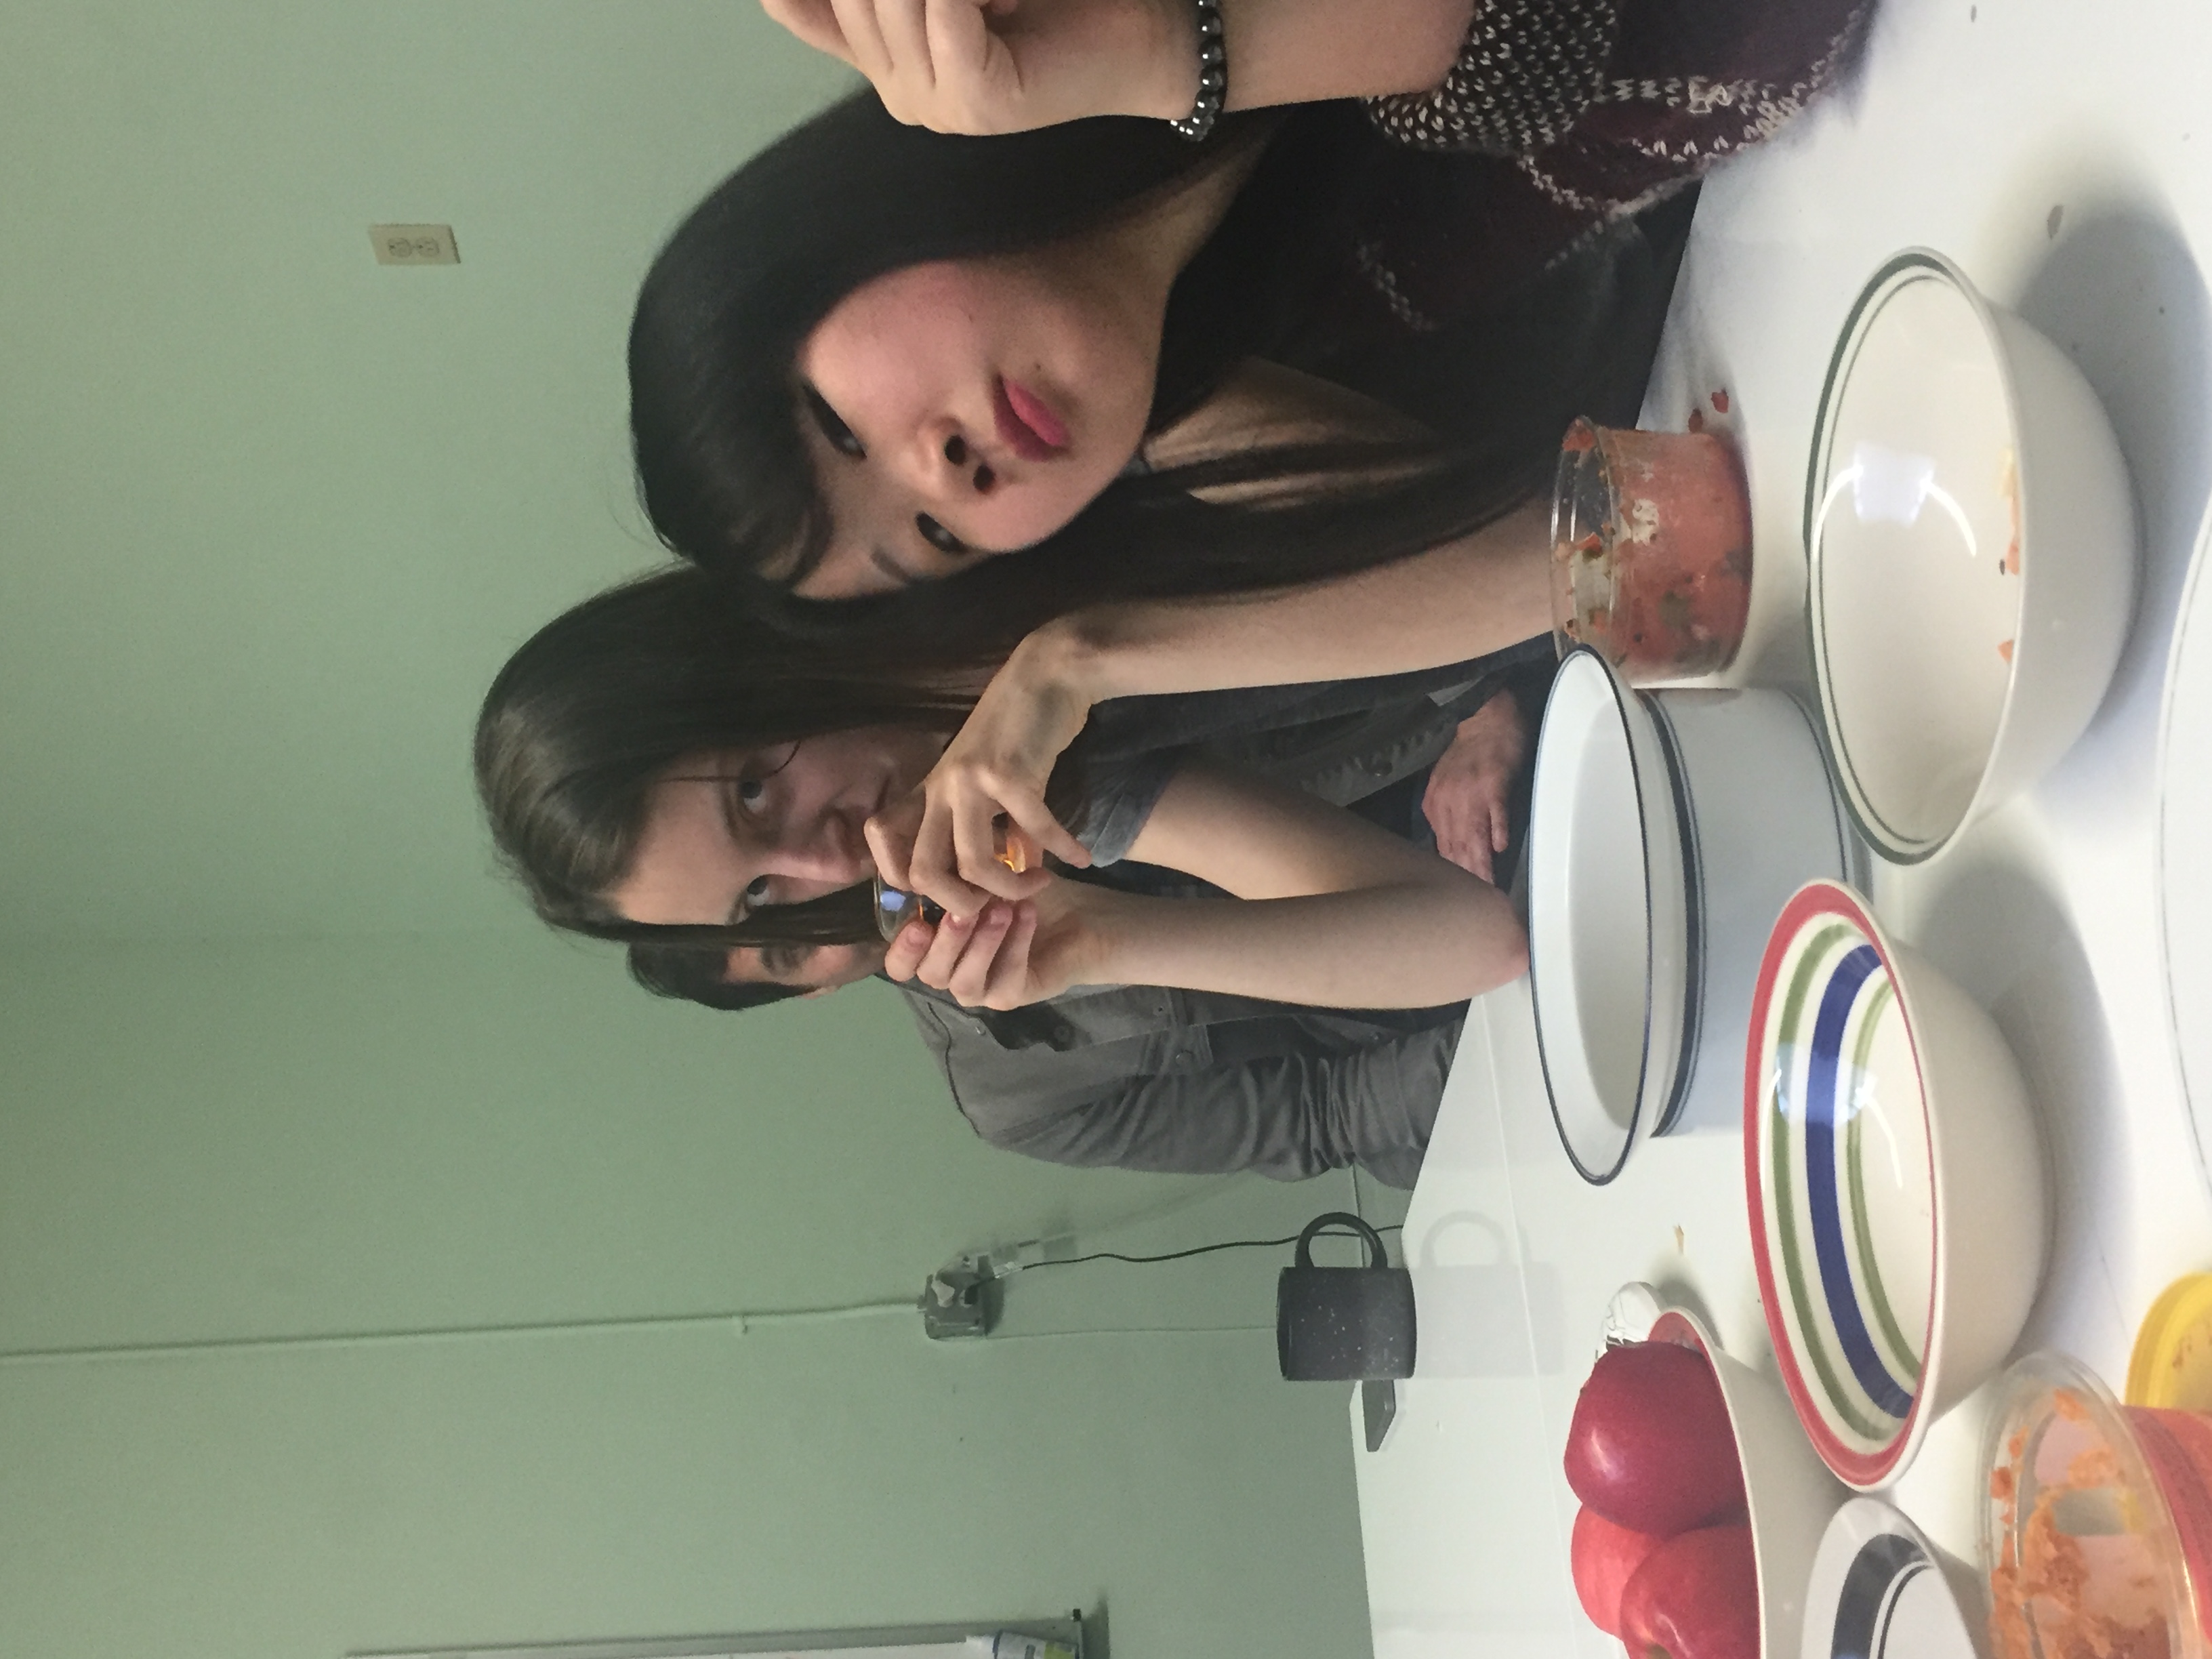 Elise Mills (drinker), Jennifer Zhang & Jon Bernson (photo bombers), tea time #1.